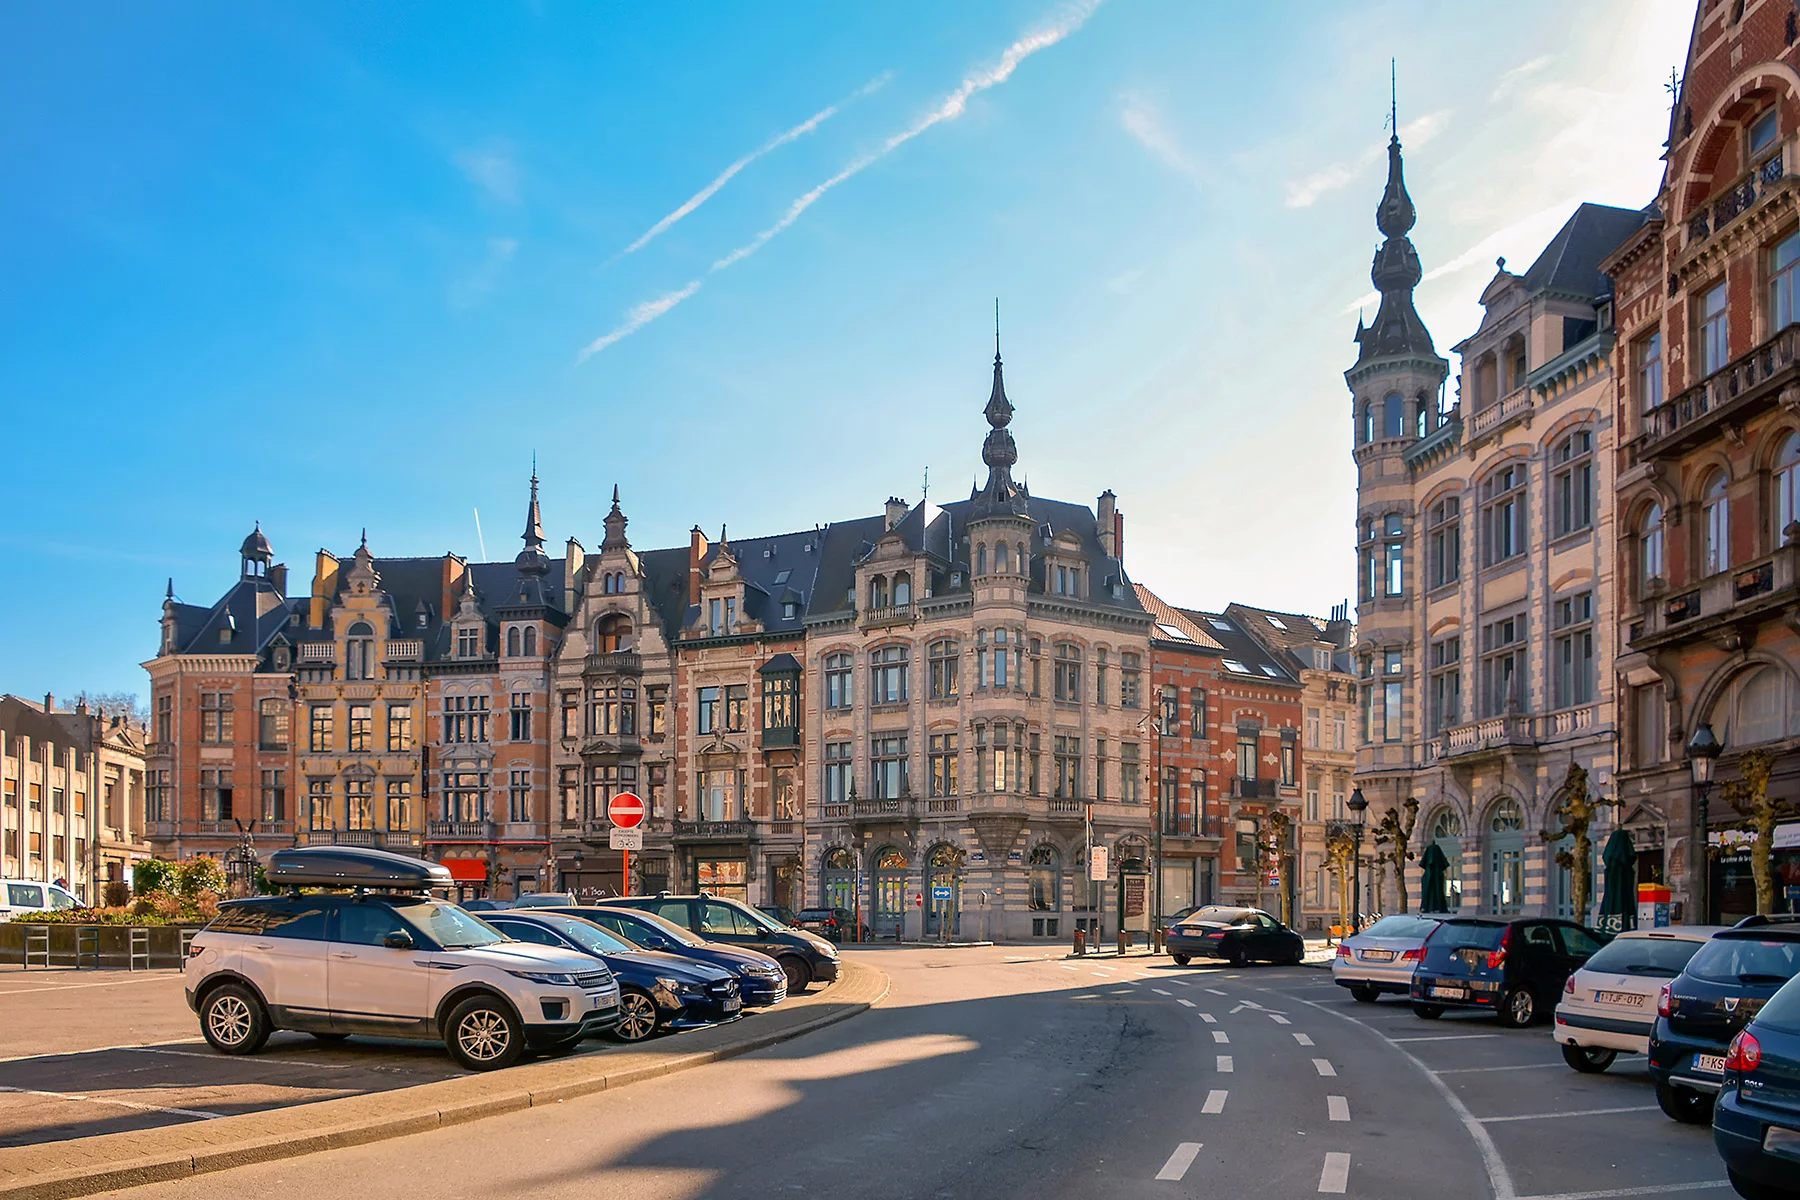 Street view of Schaerbeek, one of the northern neighborhoods of Brussels